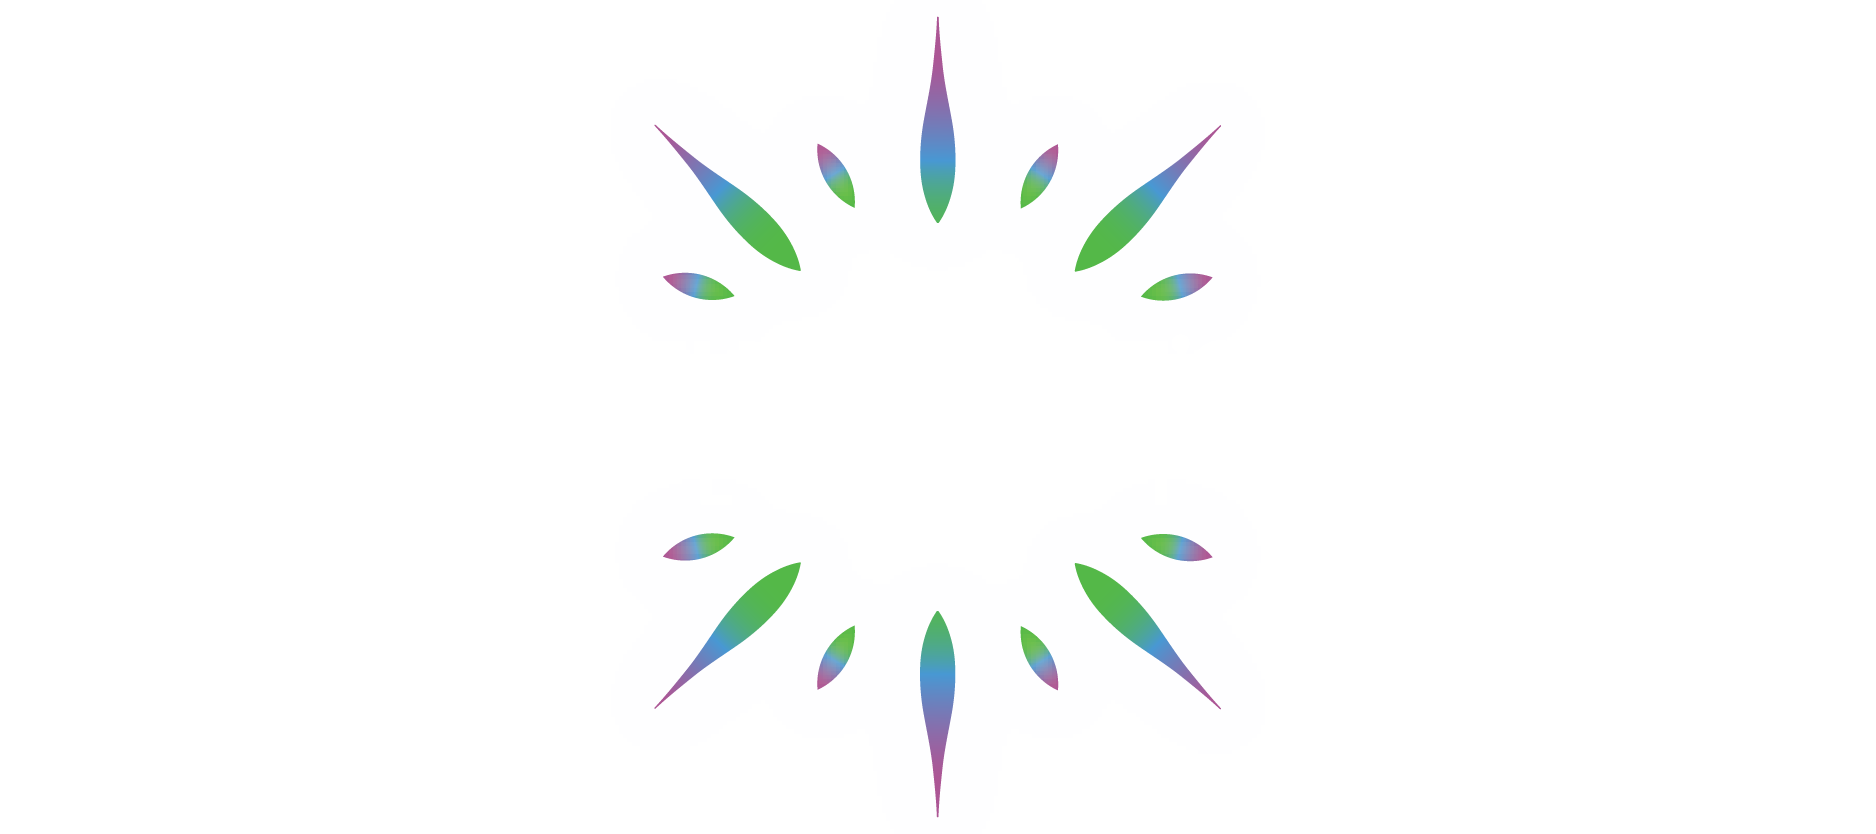 The Night’s Light